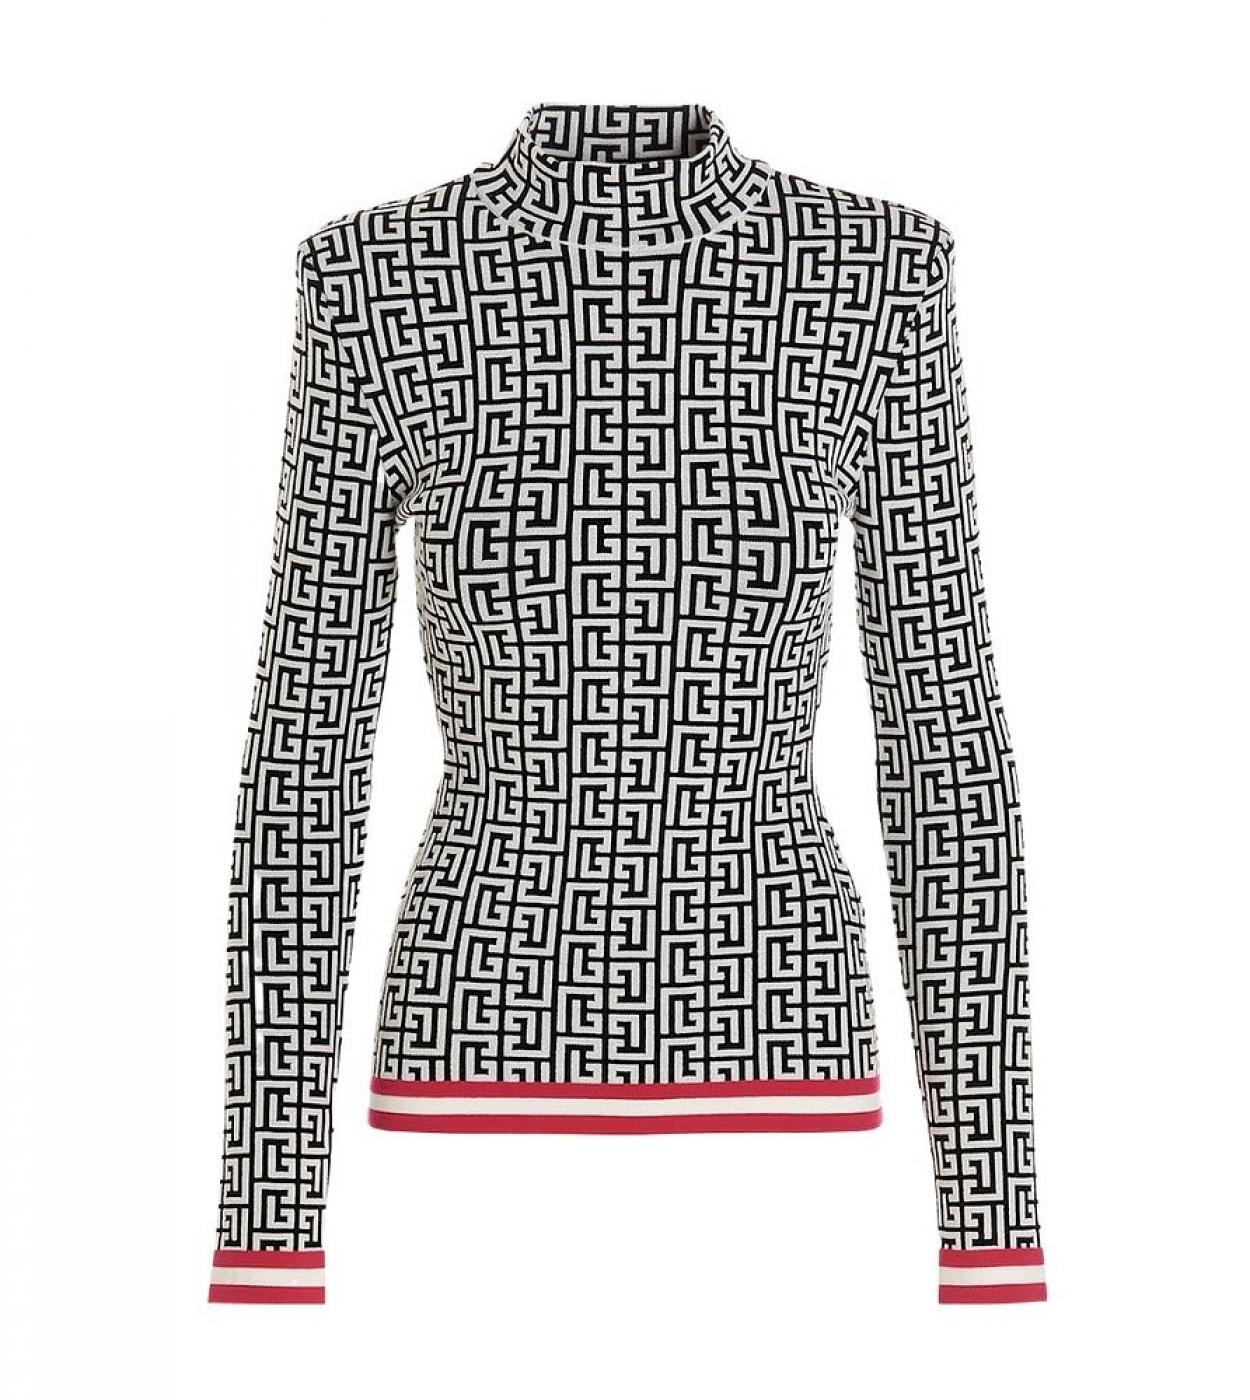 Nuevo diseño laberinto figura suéter Tops pantalones Jacquard punto negro blanco Plaid cuello alto suéter pulóveres mujeres invi